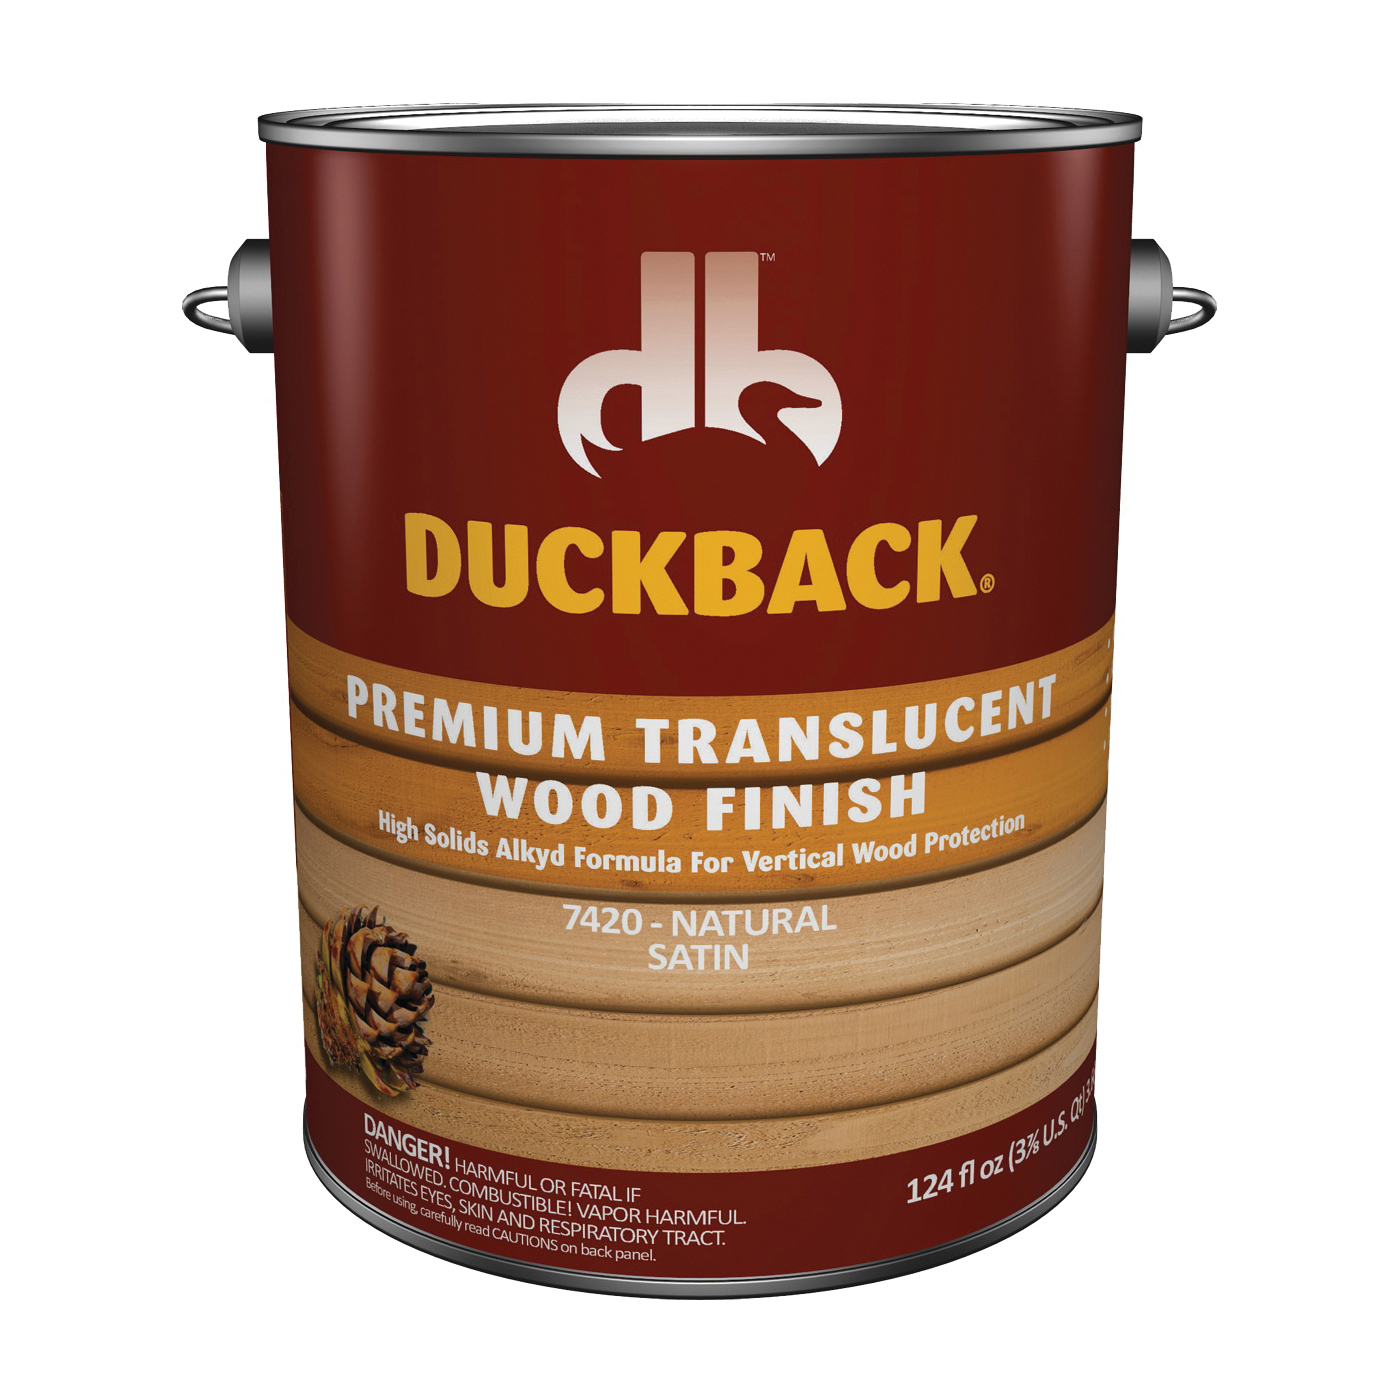 Duckback SC0074204-16